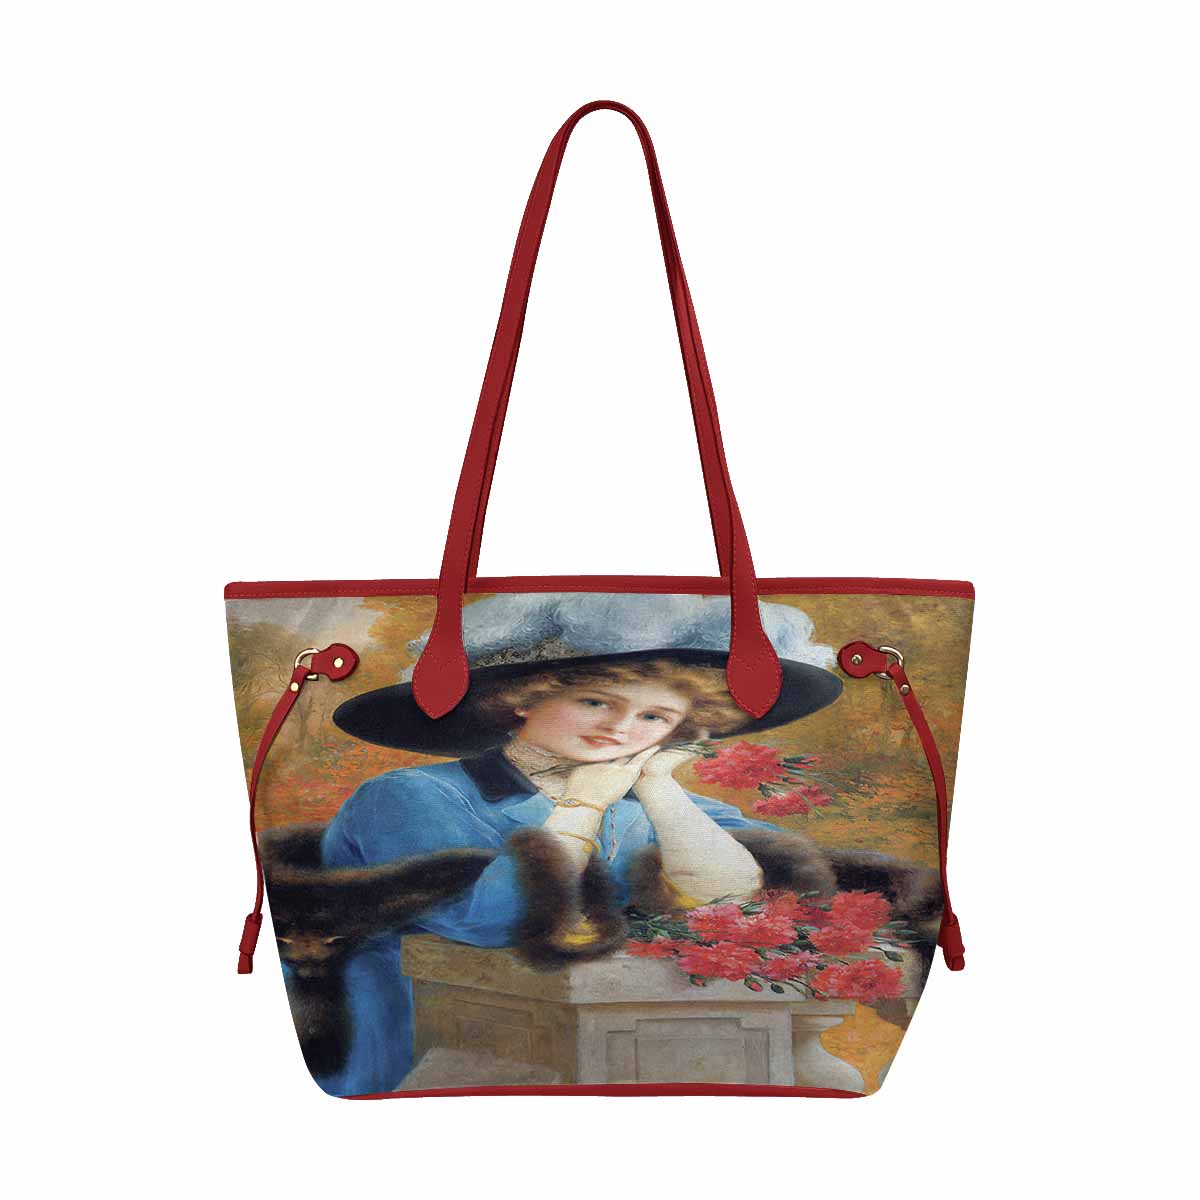 Victorian Lady Design Handbag, Model 1695361, Carnations Are For Love, RED TRIM